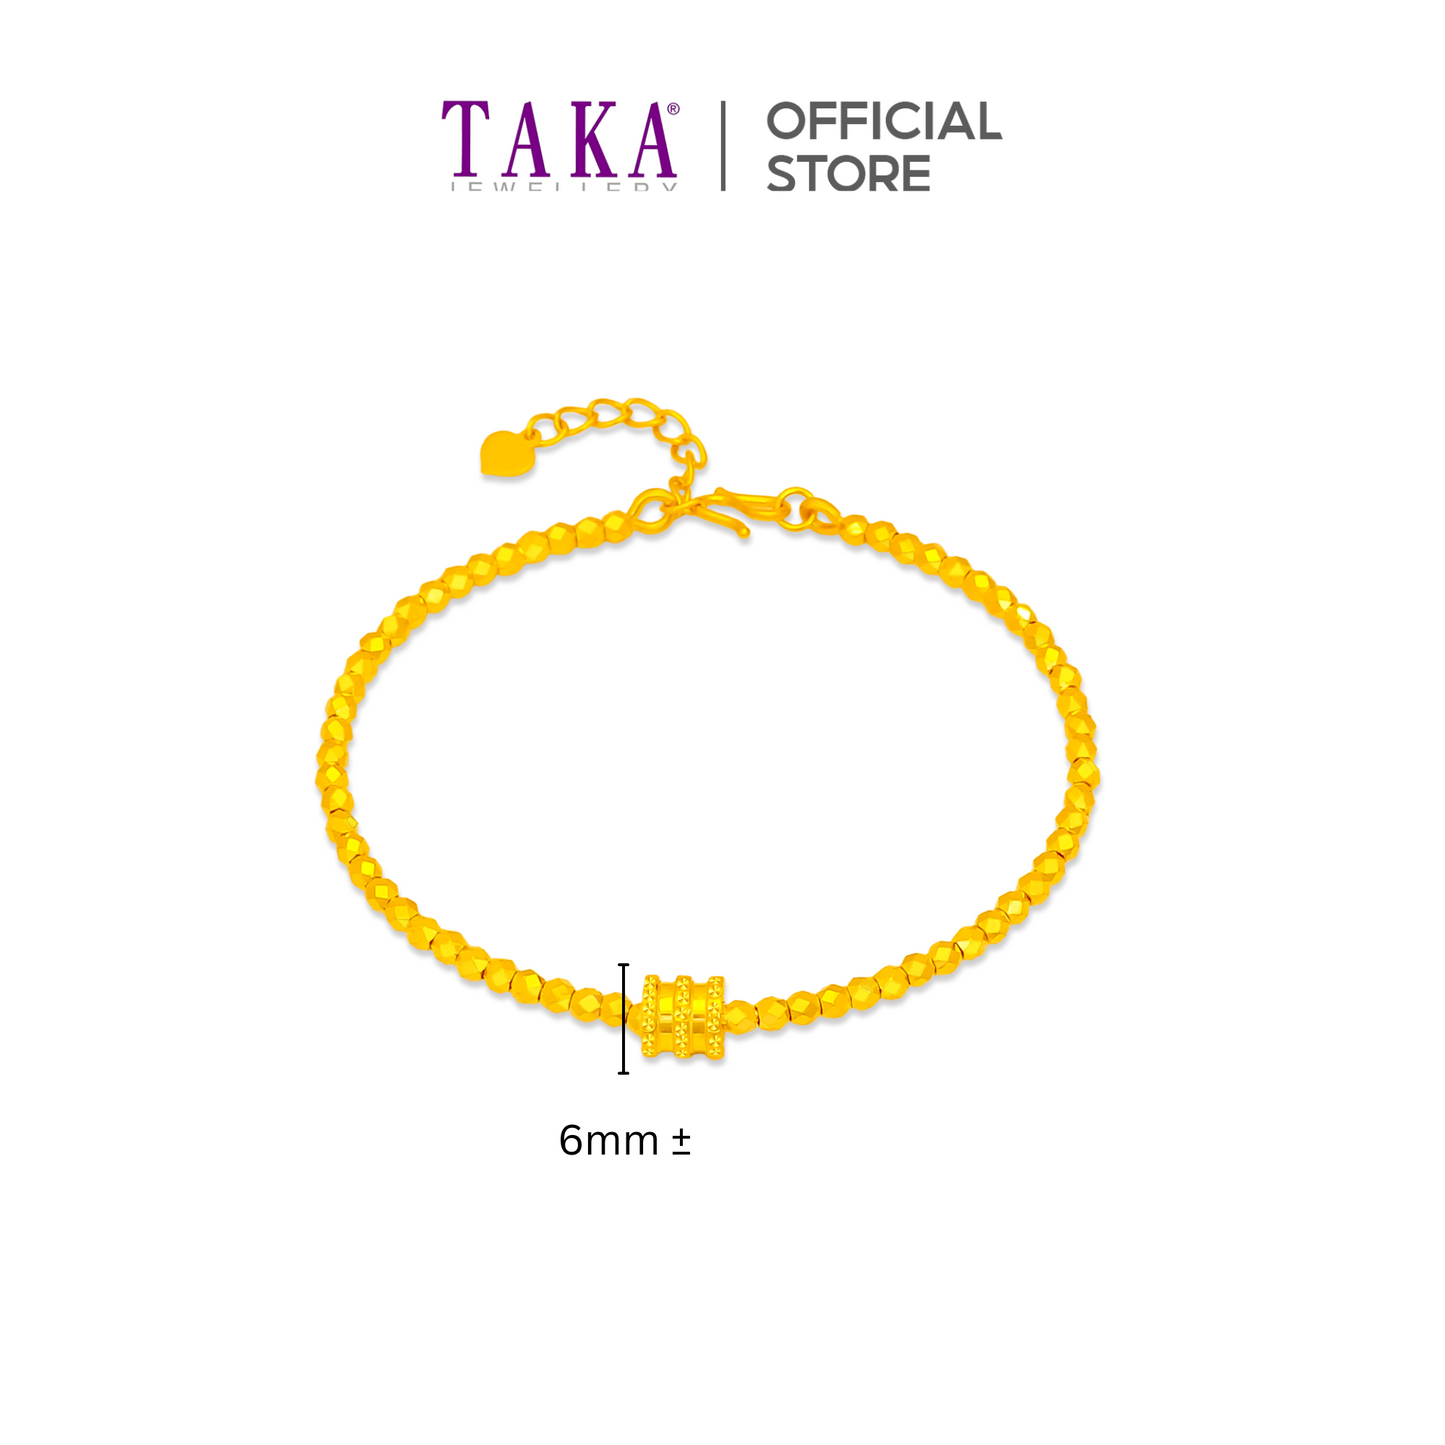 TAKA Jewellery 999 Pure Gold 5G Bangle